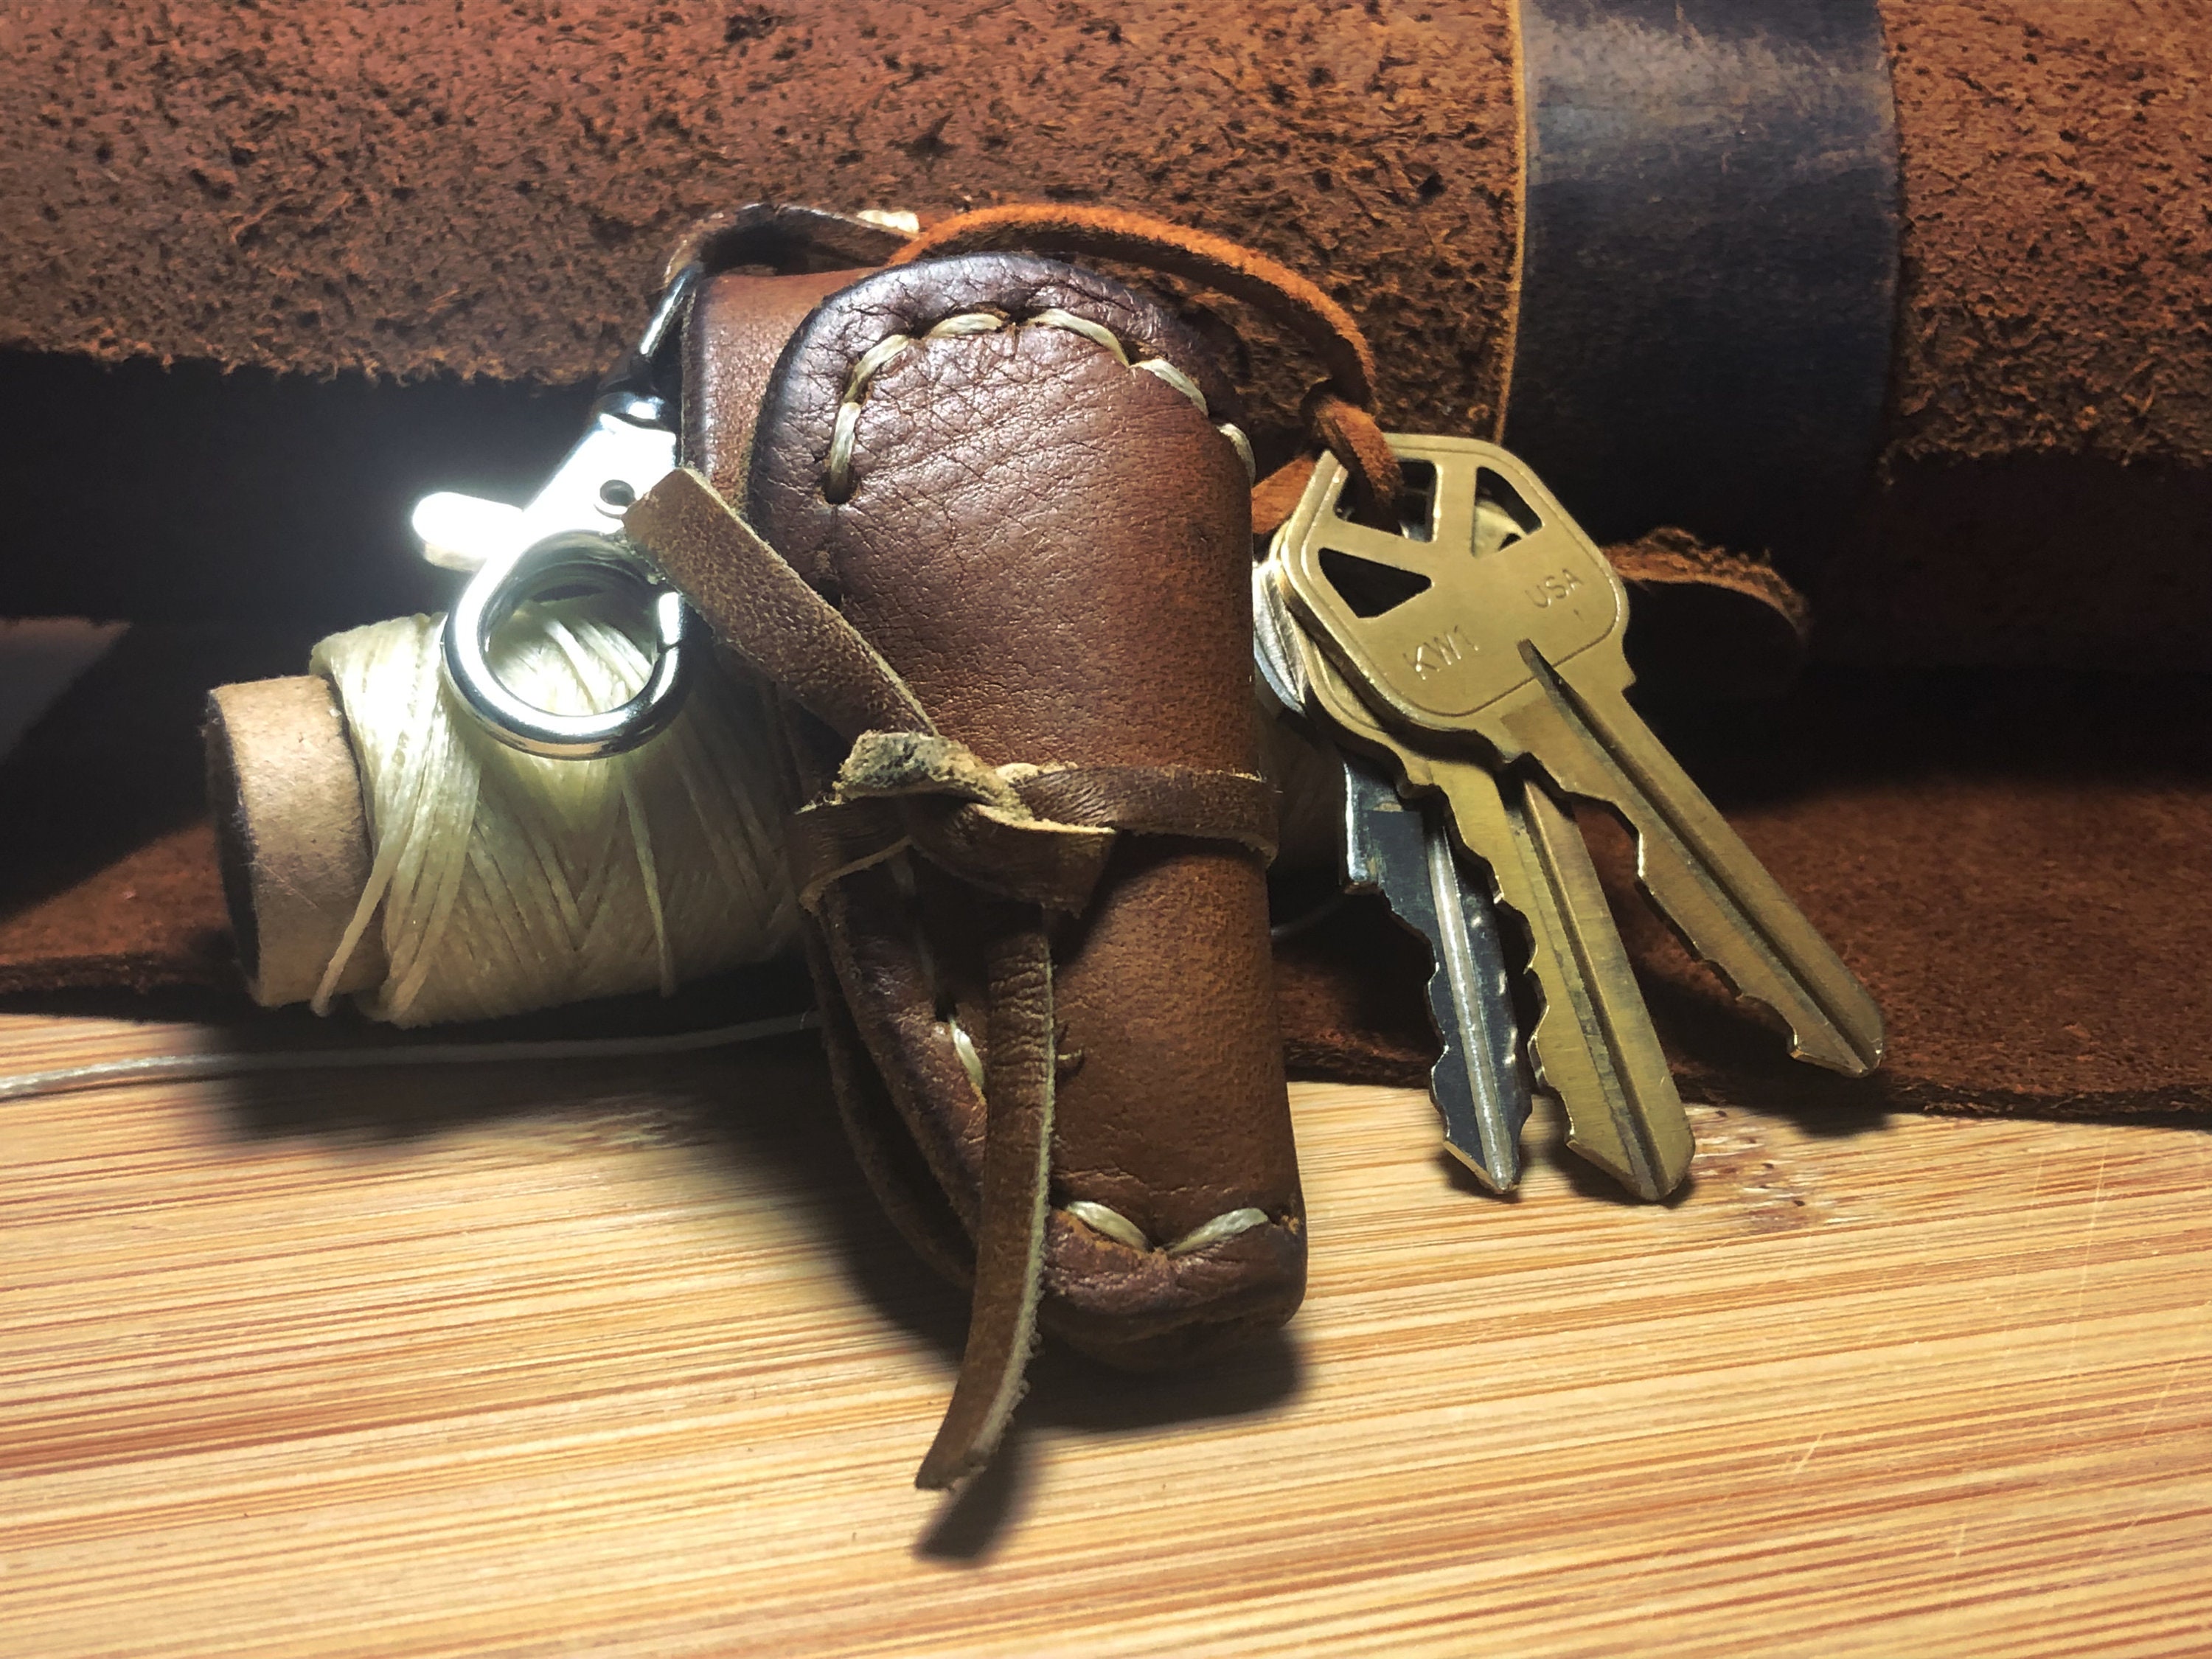 Minimalist Leather Keychain Toothpicks Holder, Handmade Leather Case With  Key Ring, Keychain Holder, Pocket Toothpick Holder, Gift Idea 